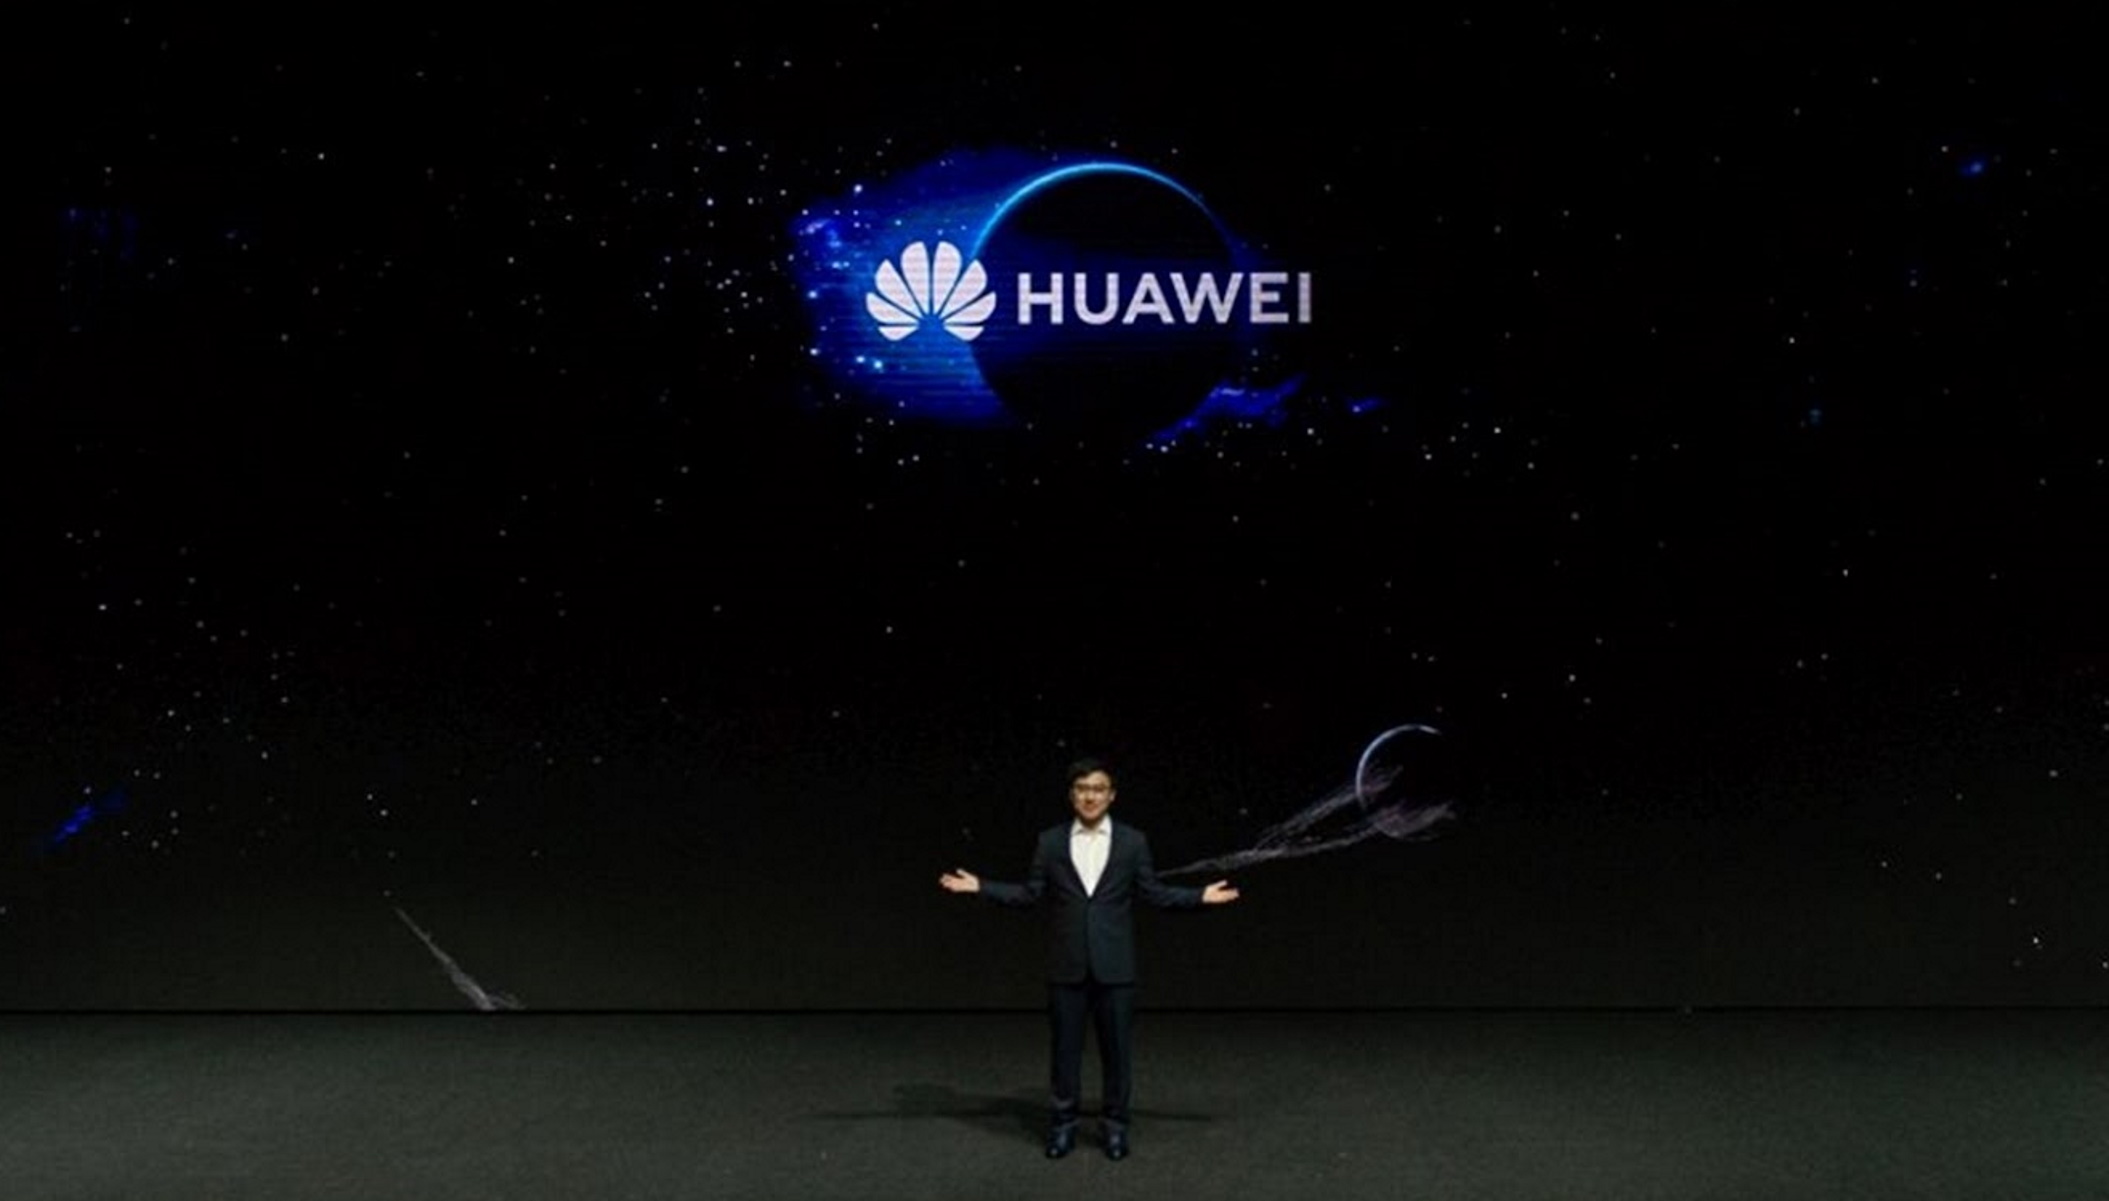 Huawei: Παρουσίασε νέα προϊόντα υψηλής τεχνολογίας σε φαντασμαγορική εκδήλωση στην Κωνσταντινούπολη